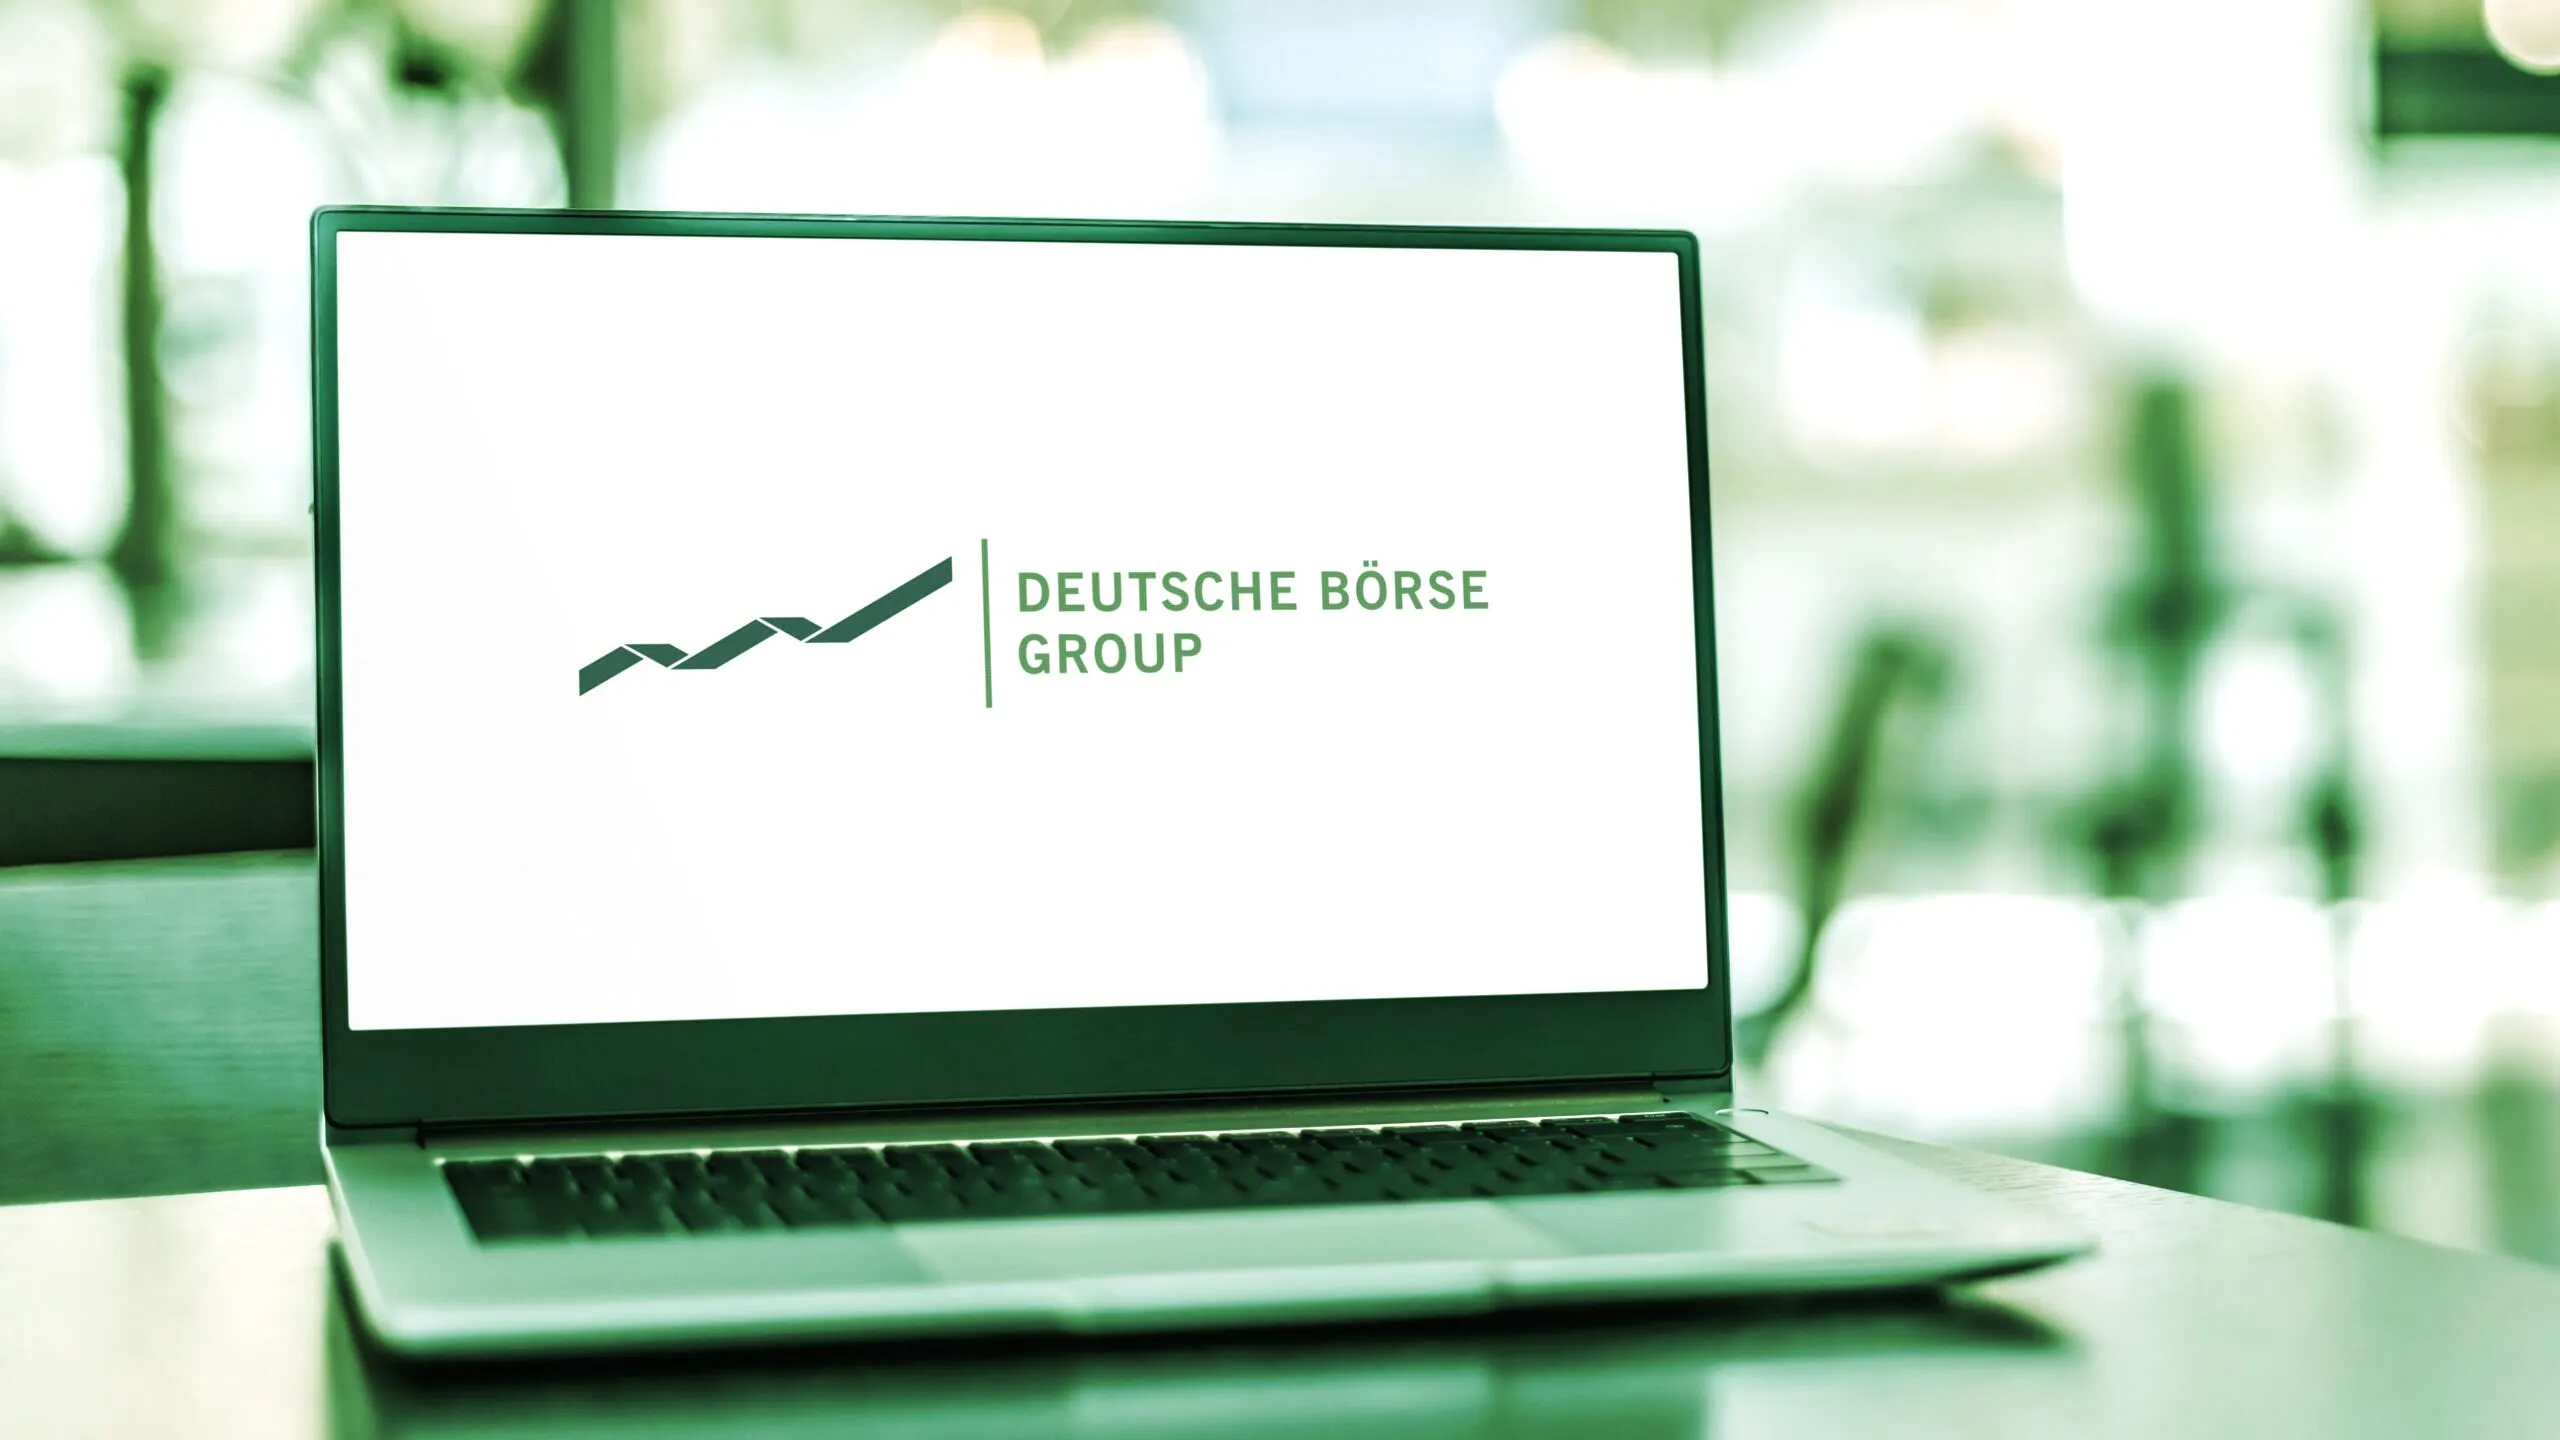 Deutsche Börse is a German stock exchange. Image: Shuttestock